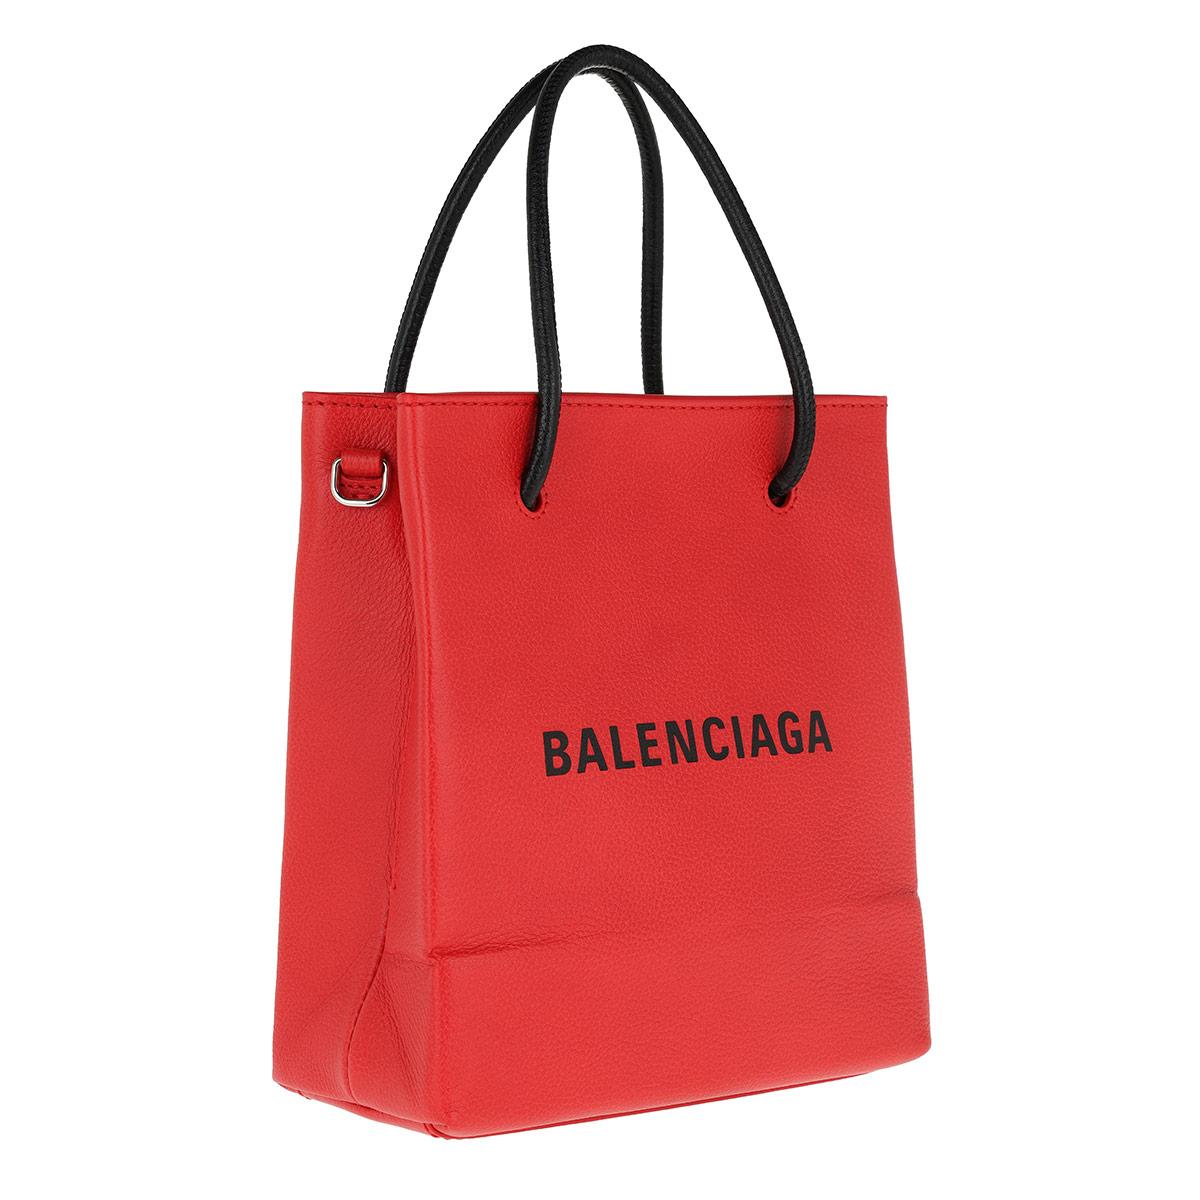 Balenciaga Shopping Tote XXS Red/Black at FORZIERI